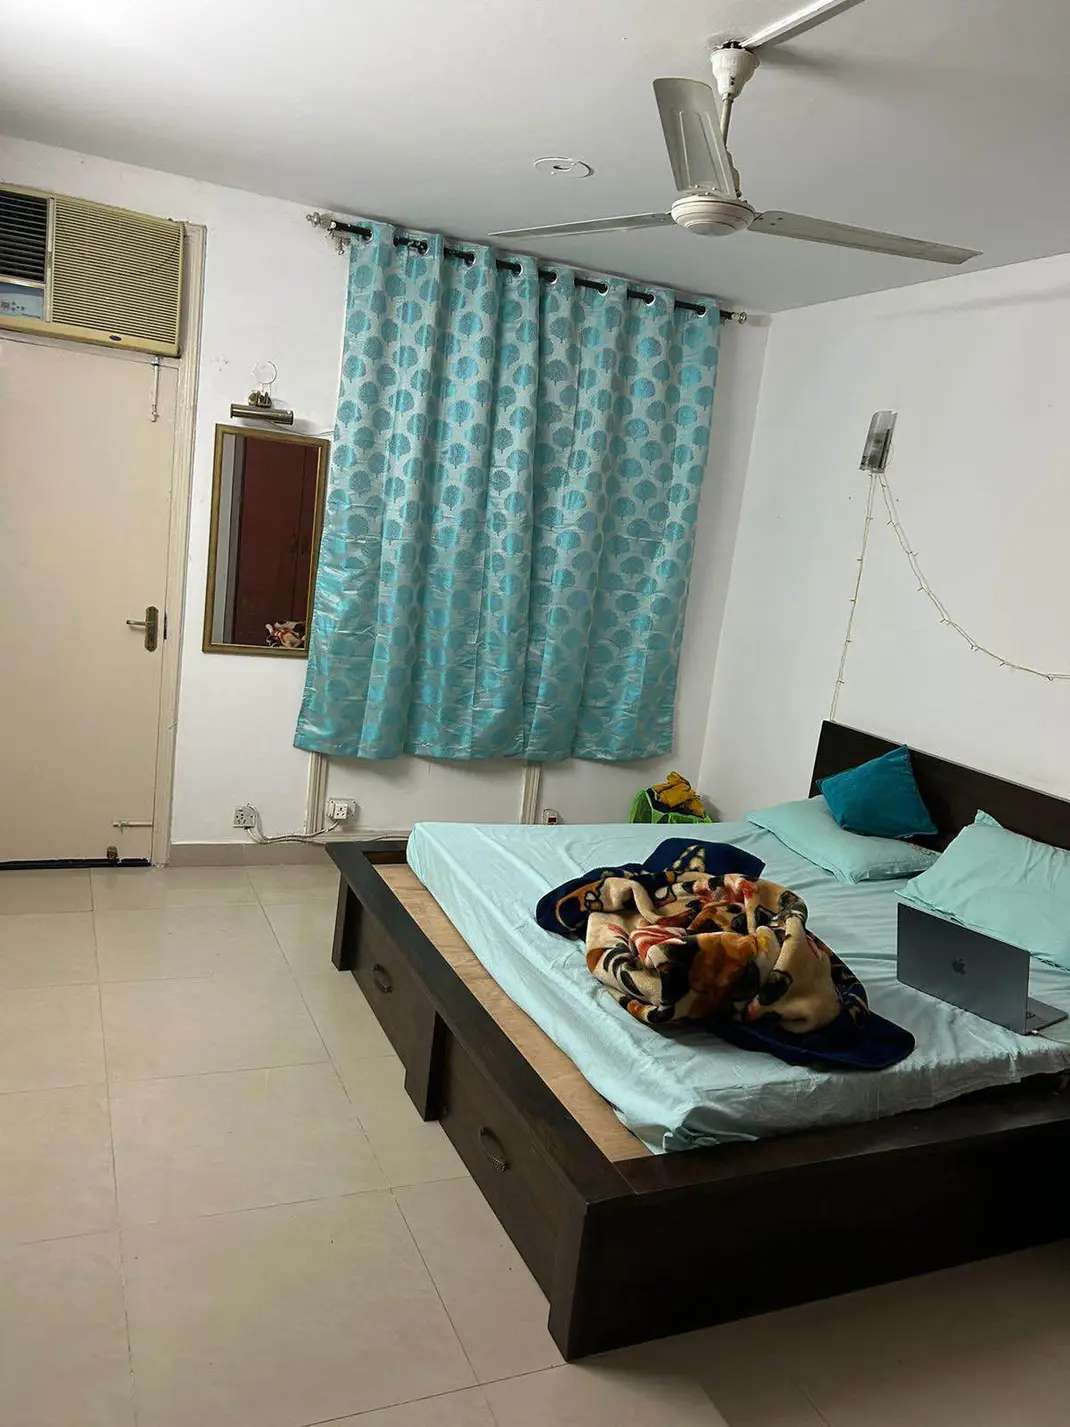 2 Bed/ 2 Bath Rent House/ Bungalow/ Villa, Furnished for rent @DLF Phase 4 Gurugram